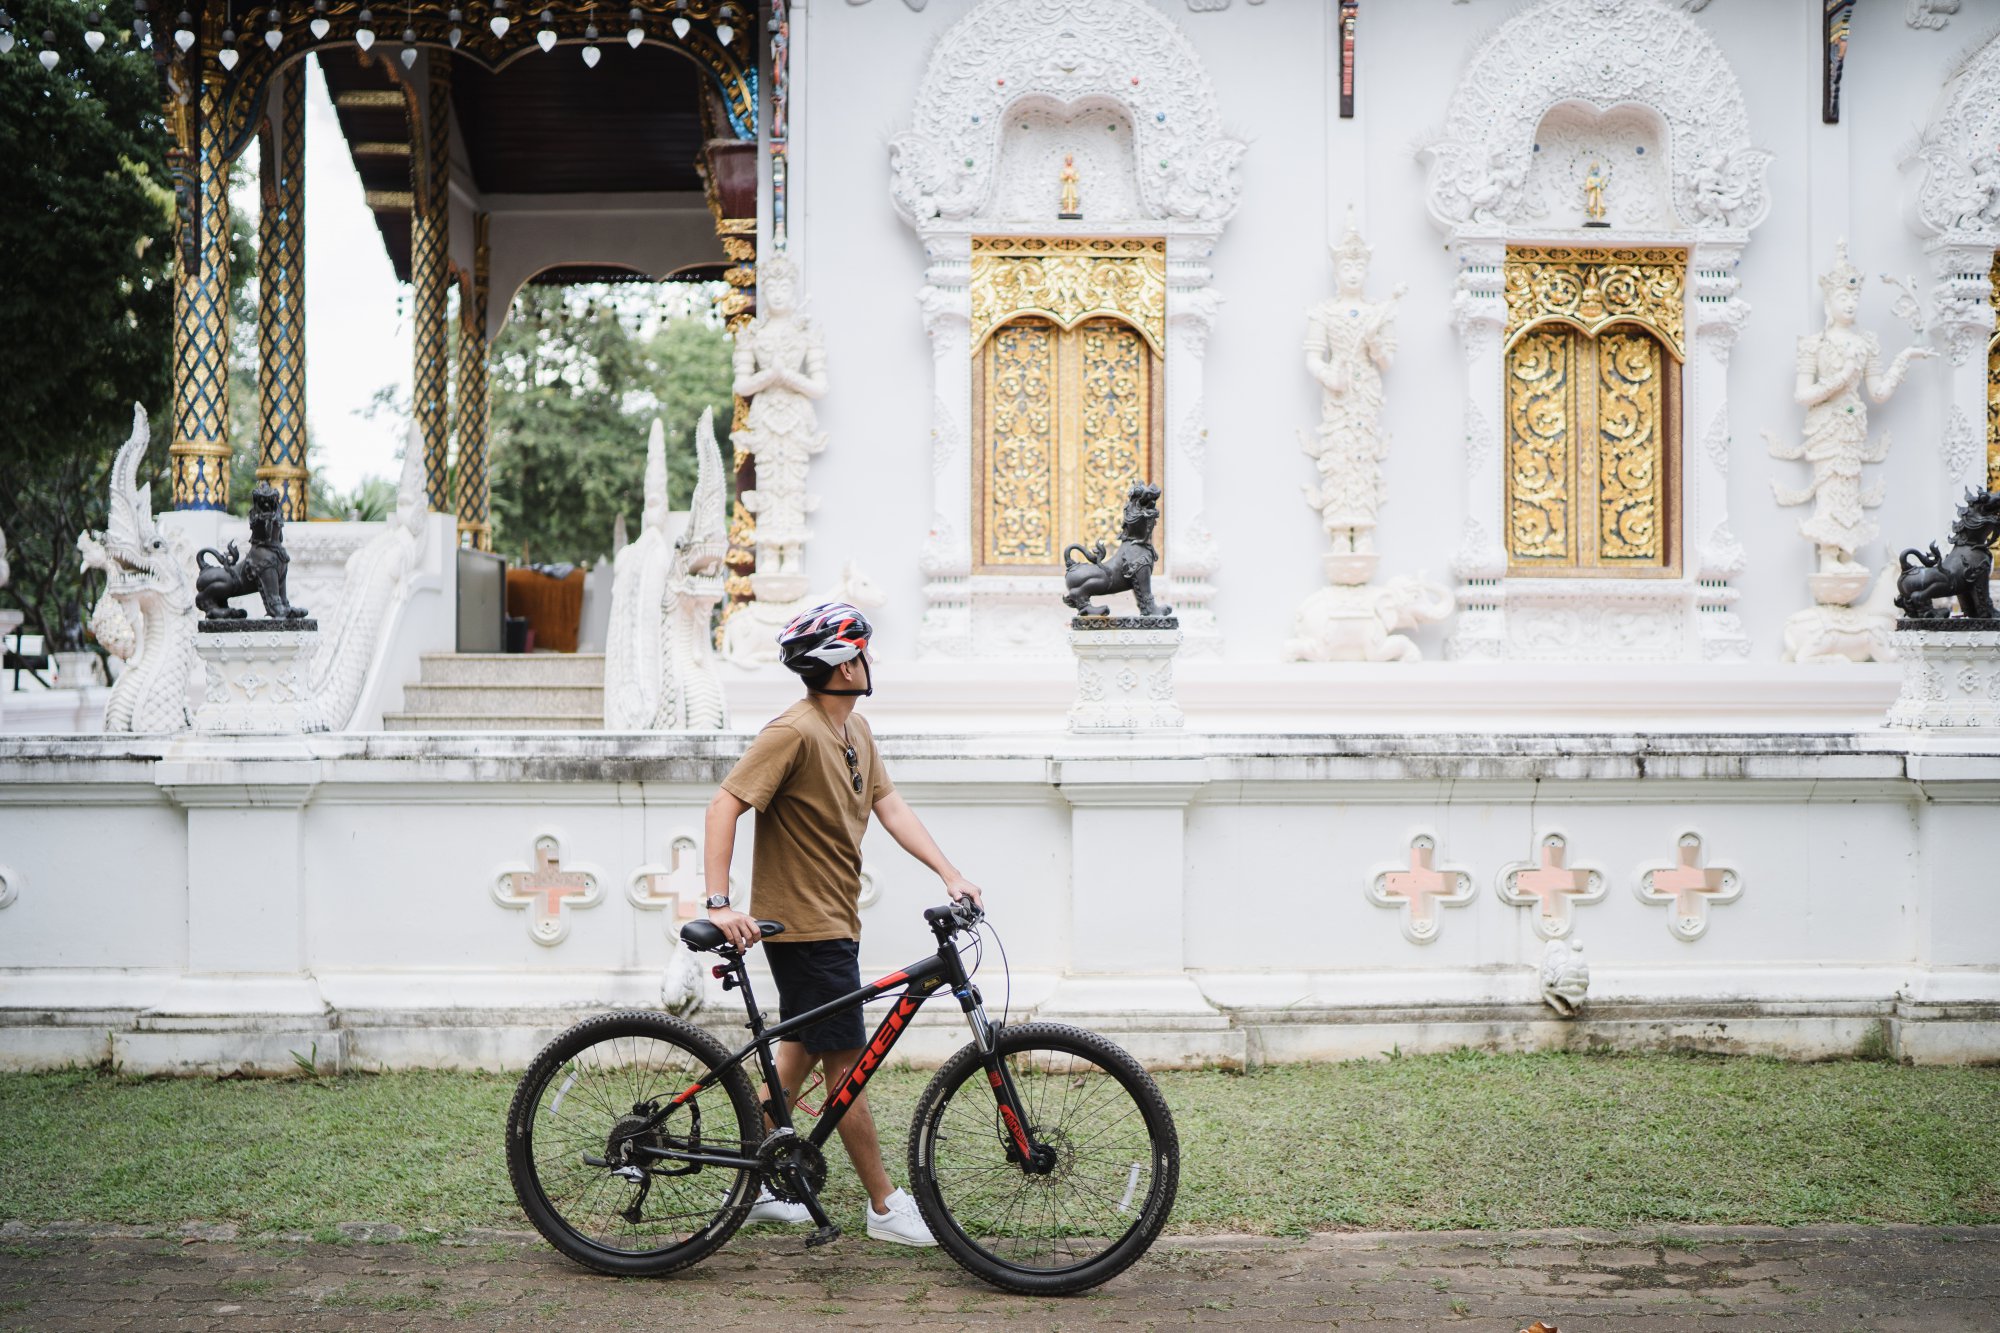 Restart your 2020, Four Seasons Resort Chiang Mai.